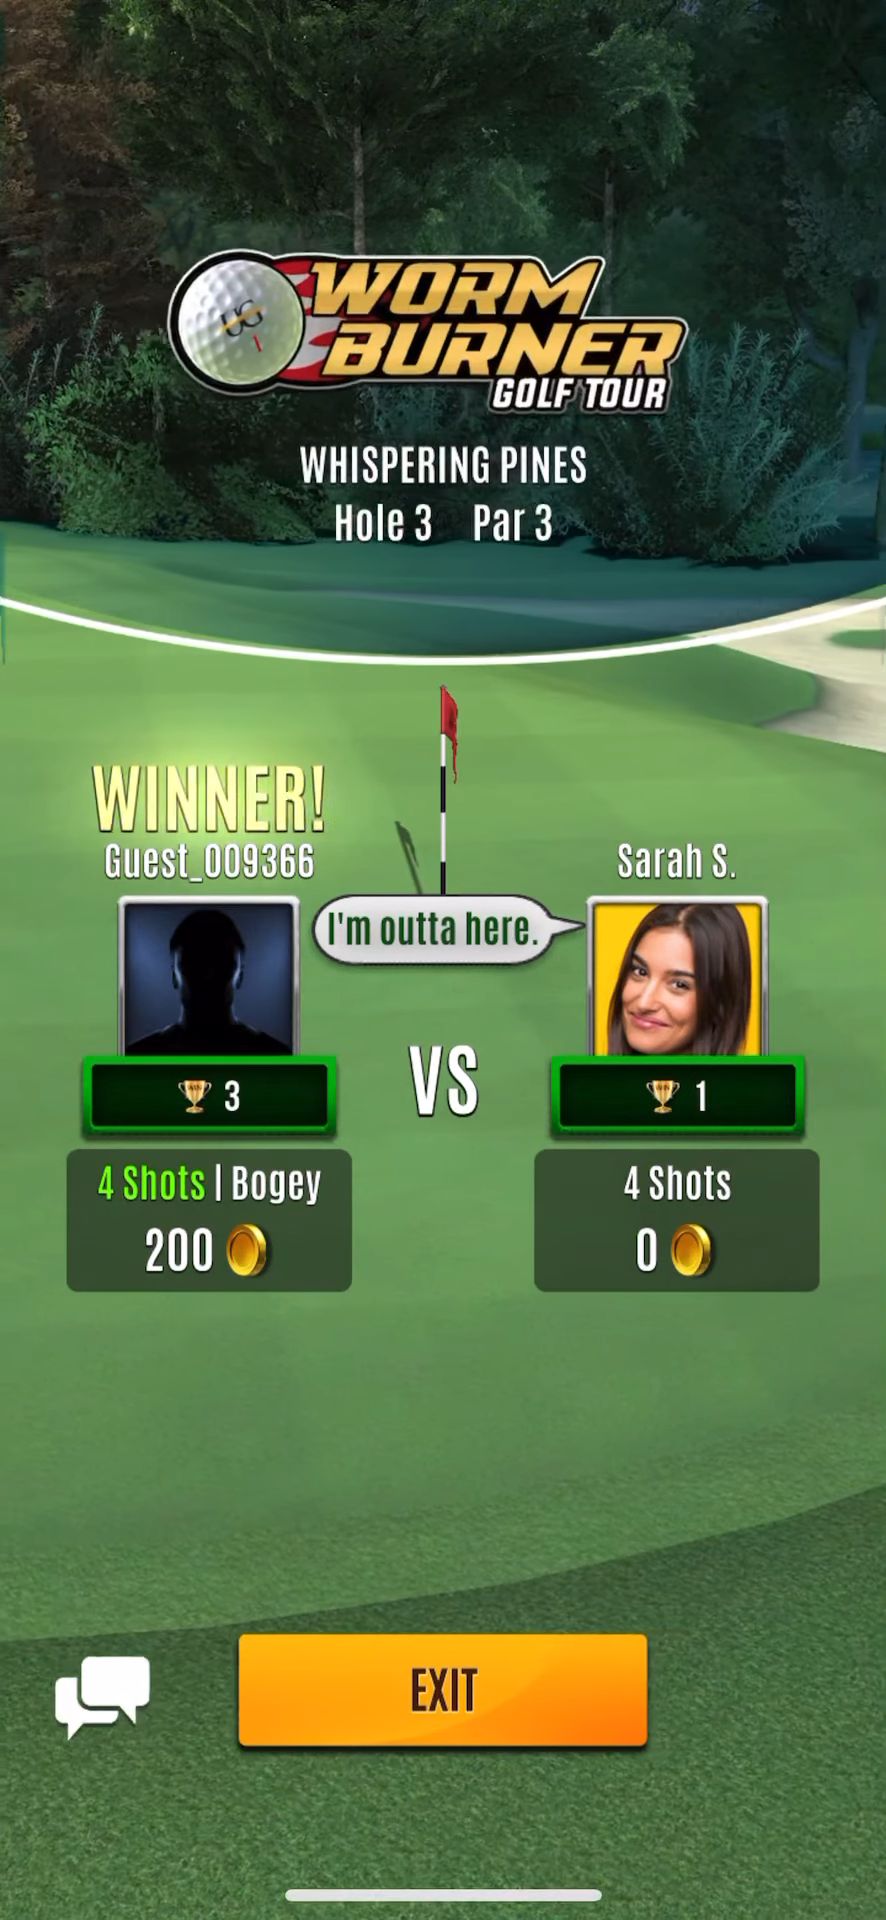 Ultimate Golf! captura de tela 1